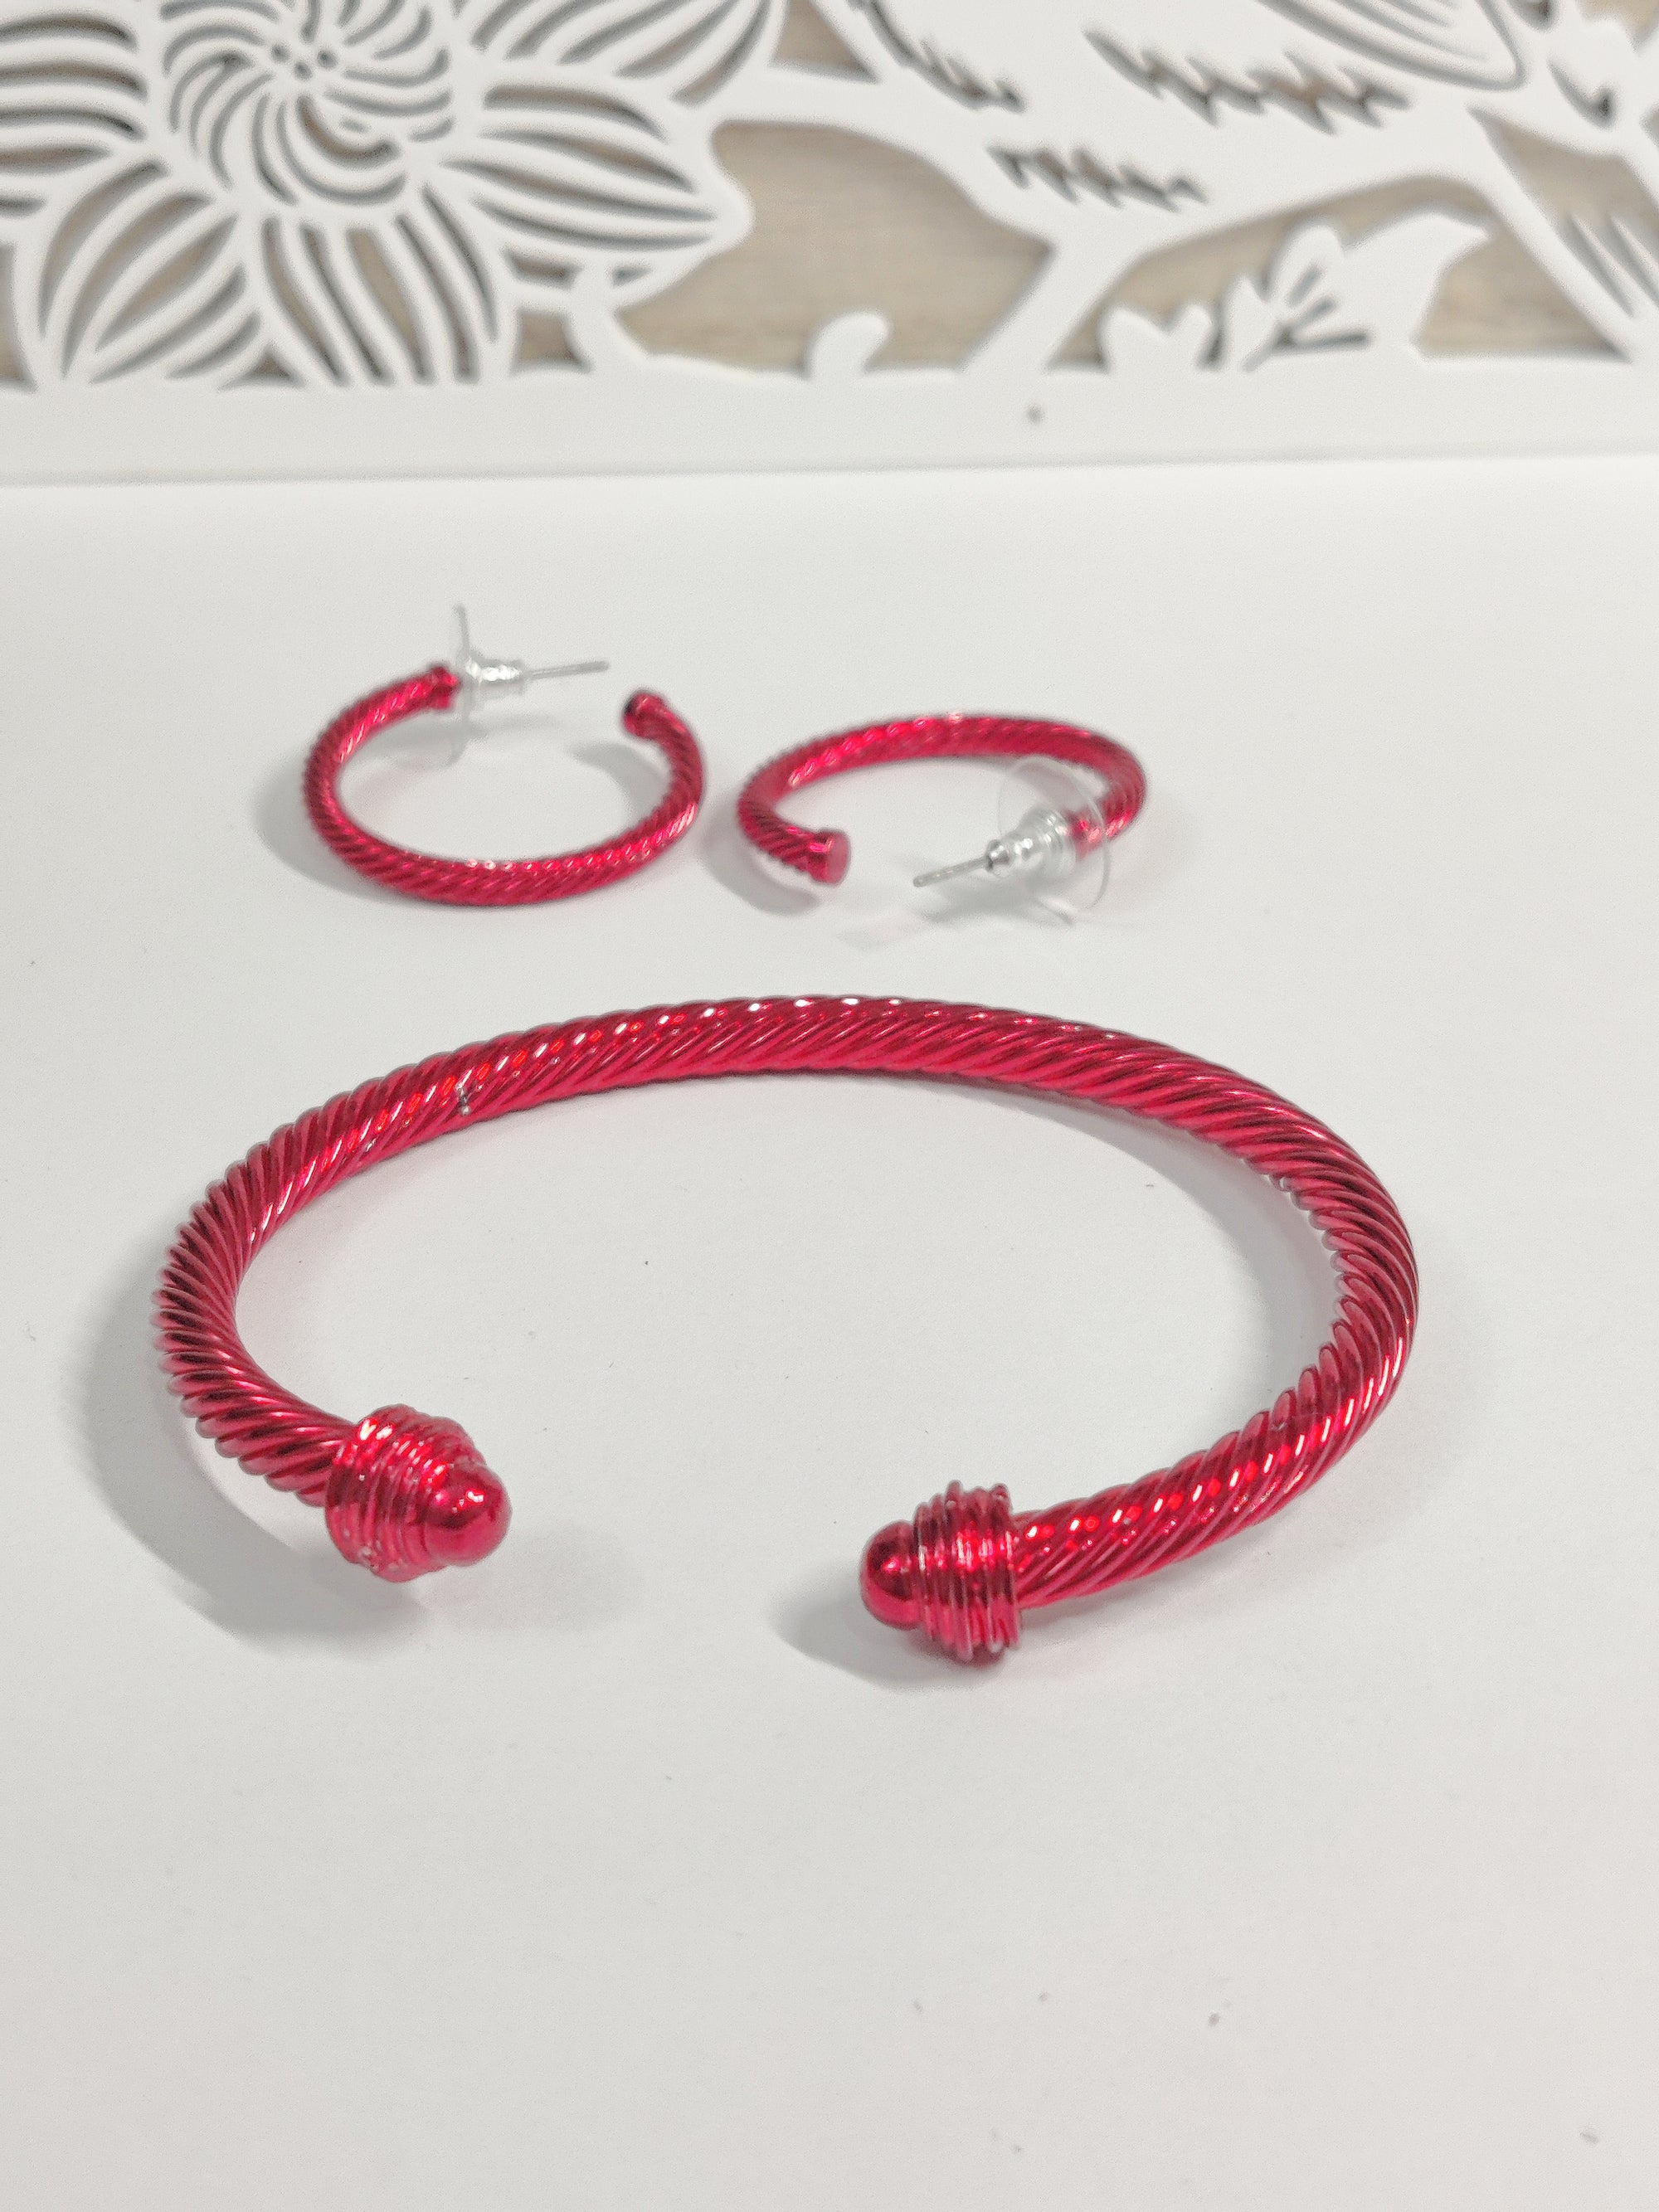 Colored metallic cable bracelet with hoop earrings